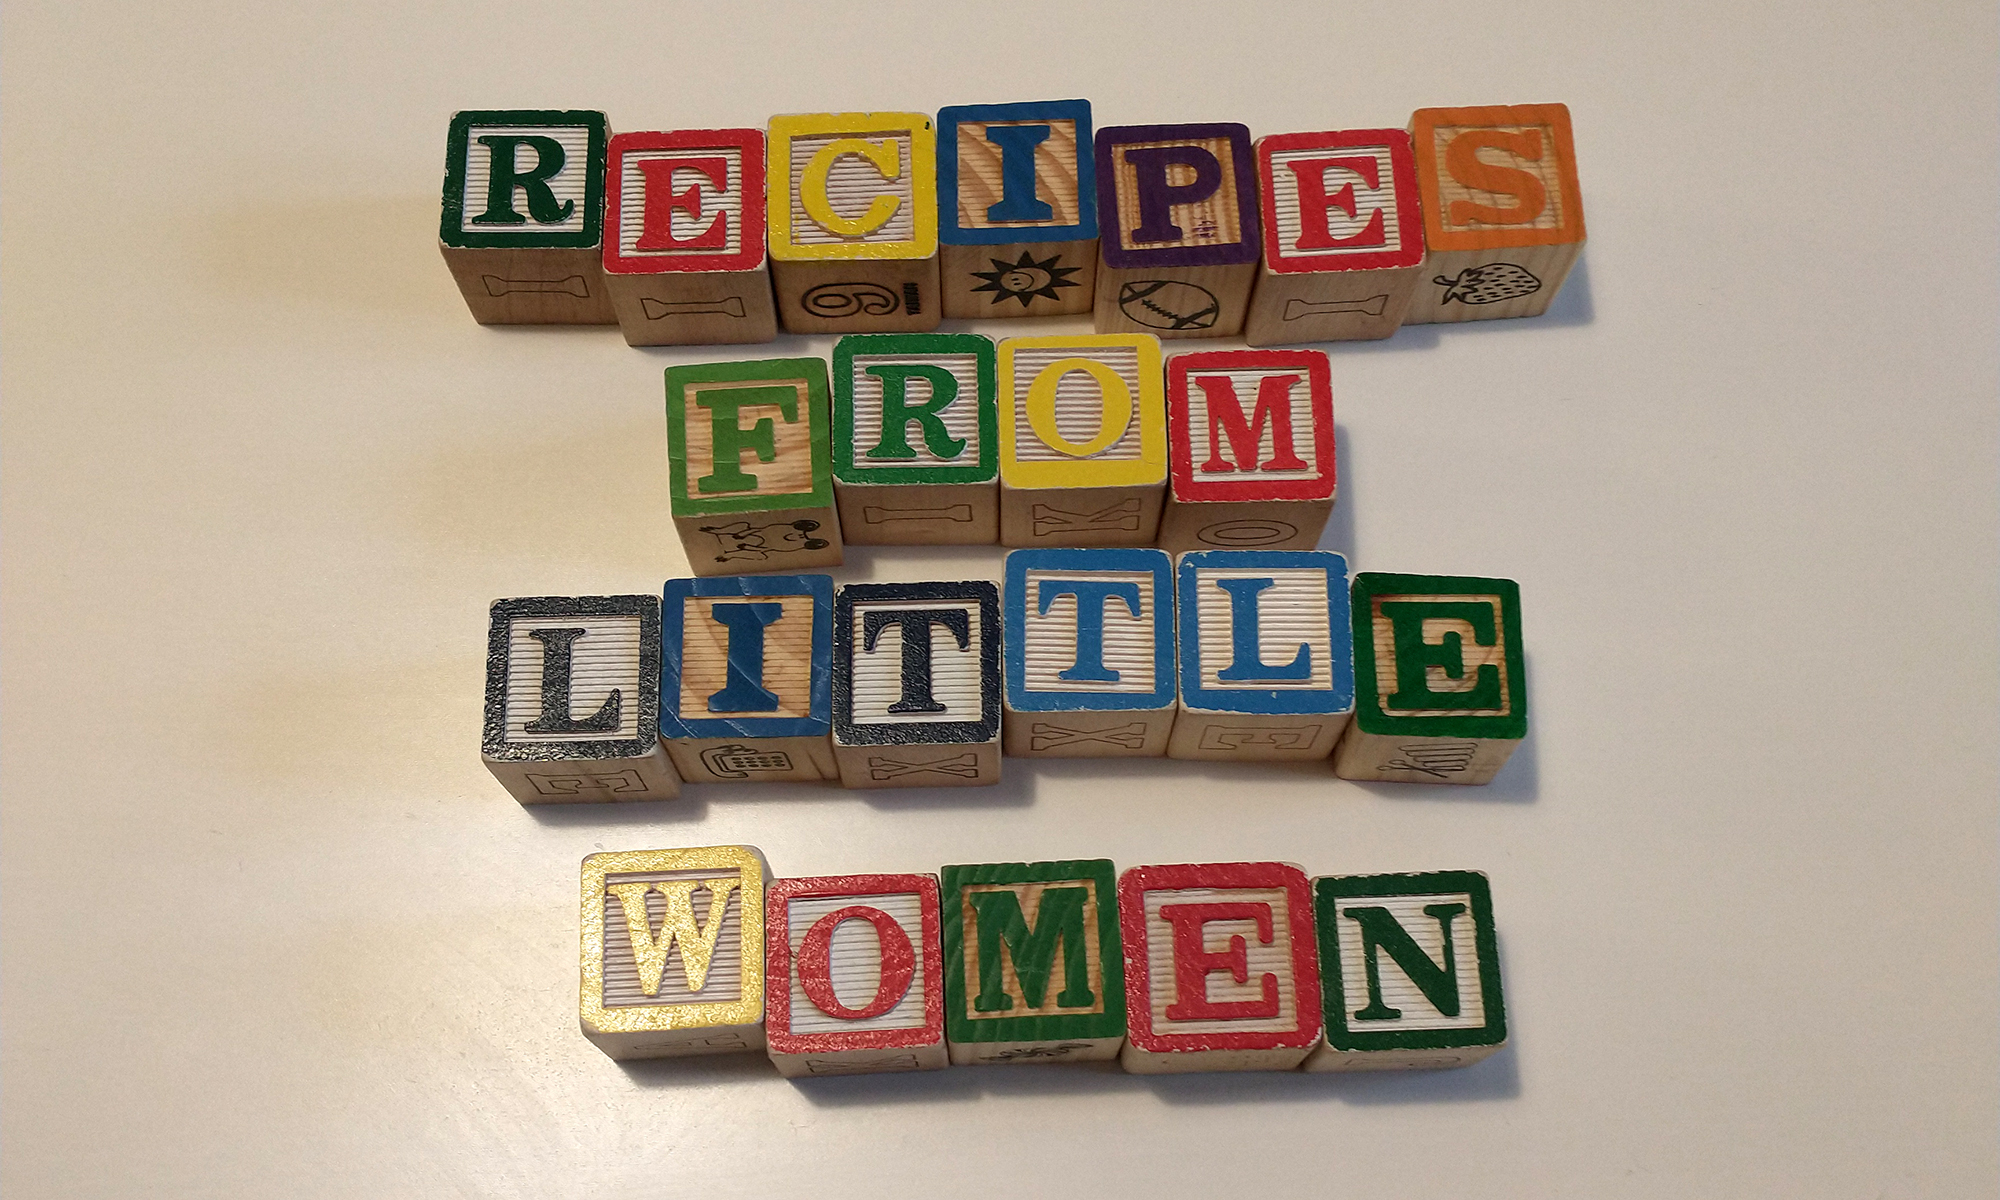 6 – Recipes from Little Women